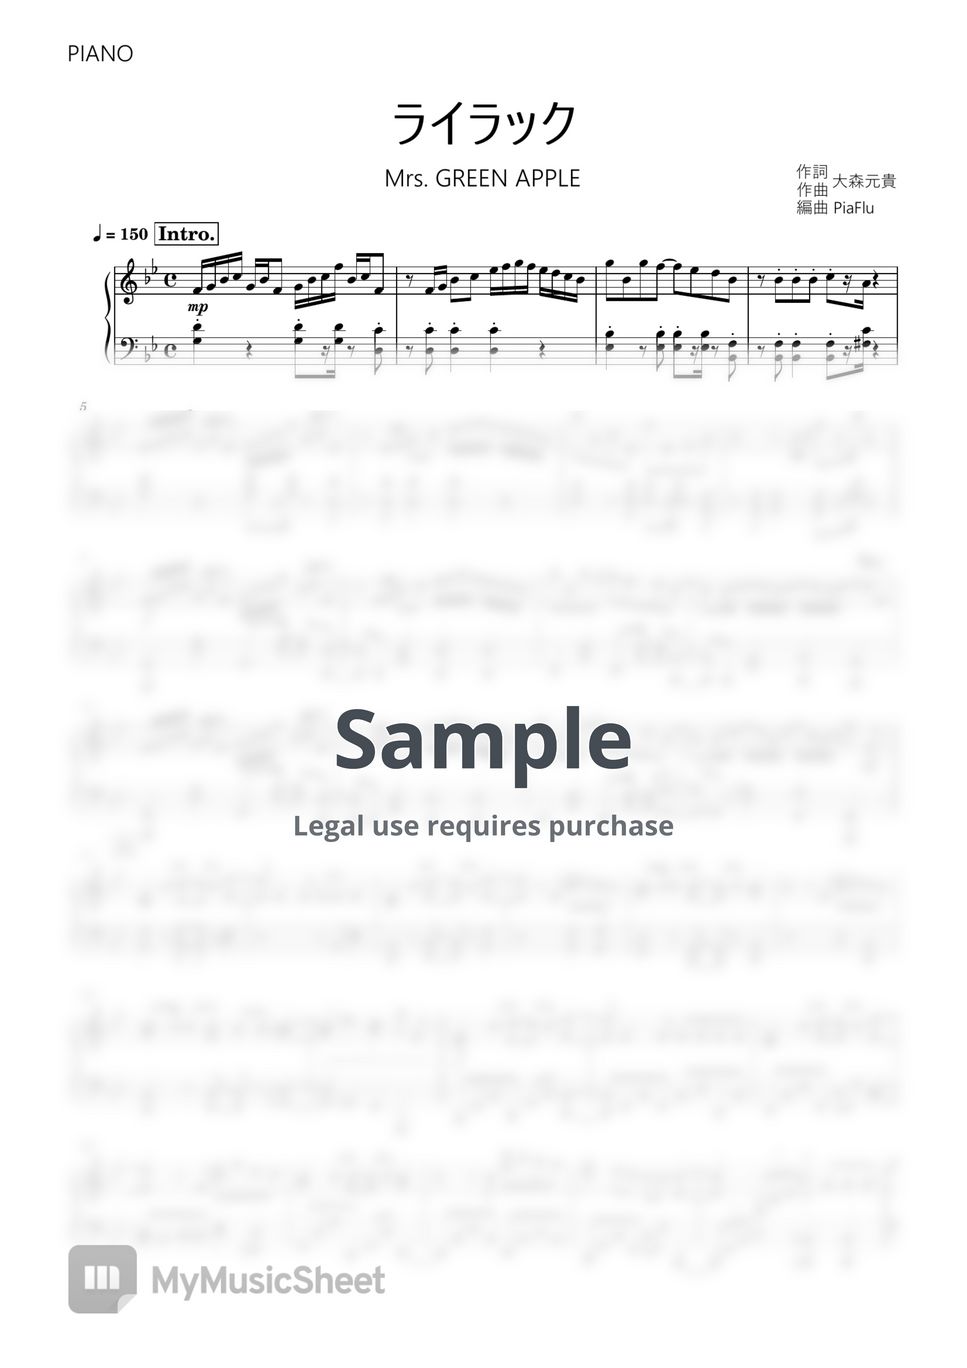 Mrs. GREEN APPLE - ライラック / Mrs. GREEN APPLE - Lilac (Piano) by PiaFlu / ピアフル Piano&Flute